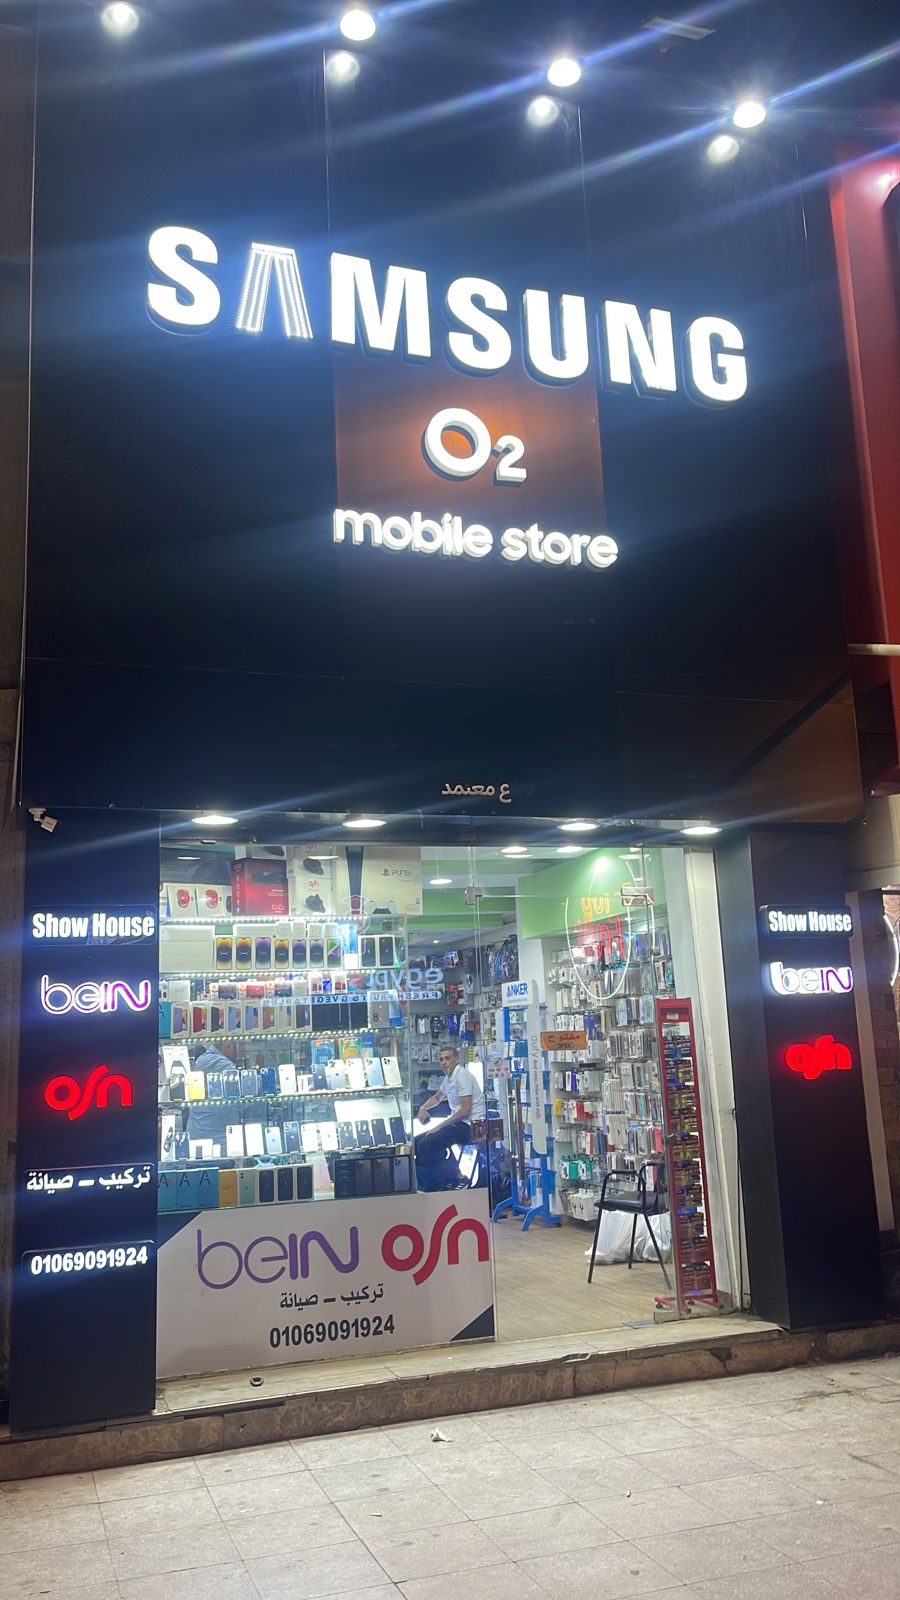 O2 Mobile Store